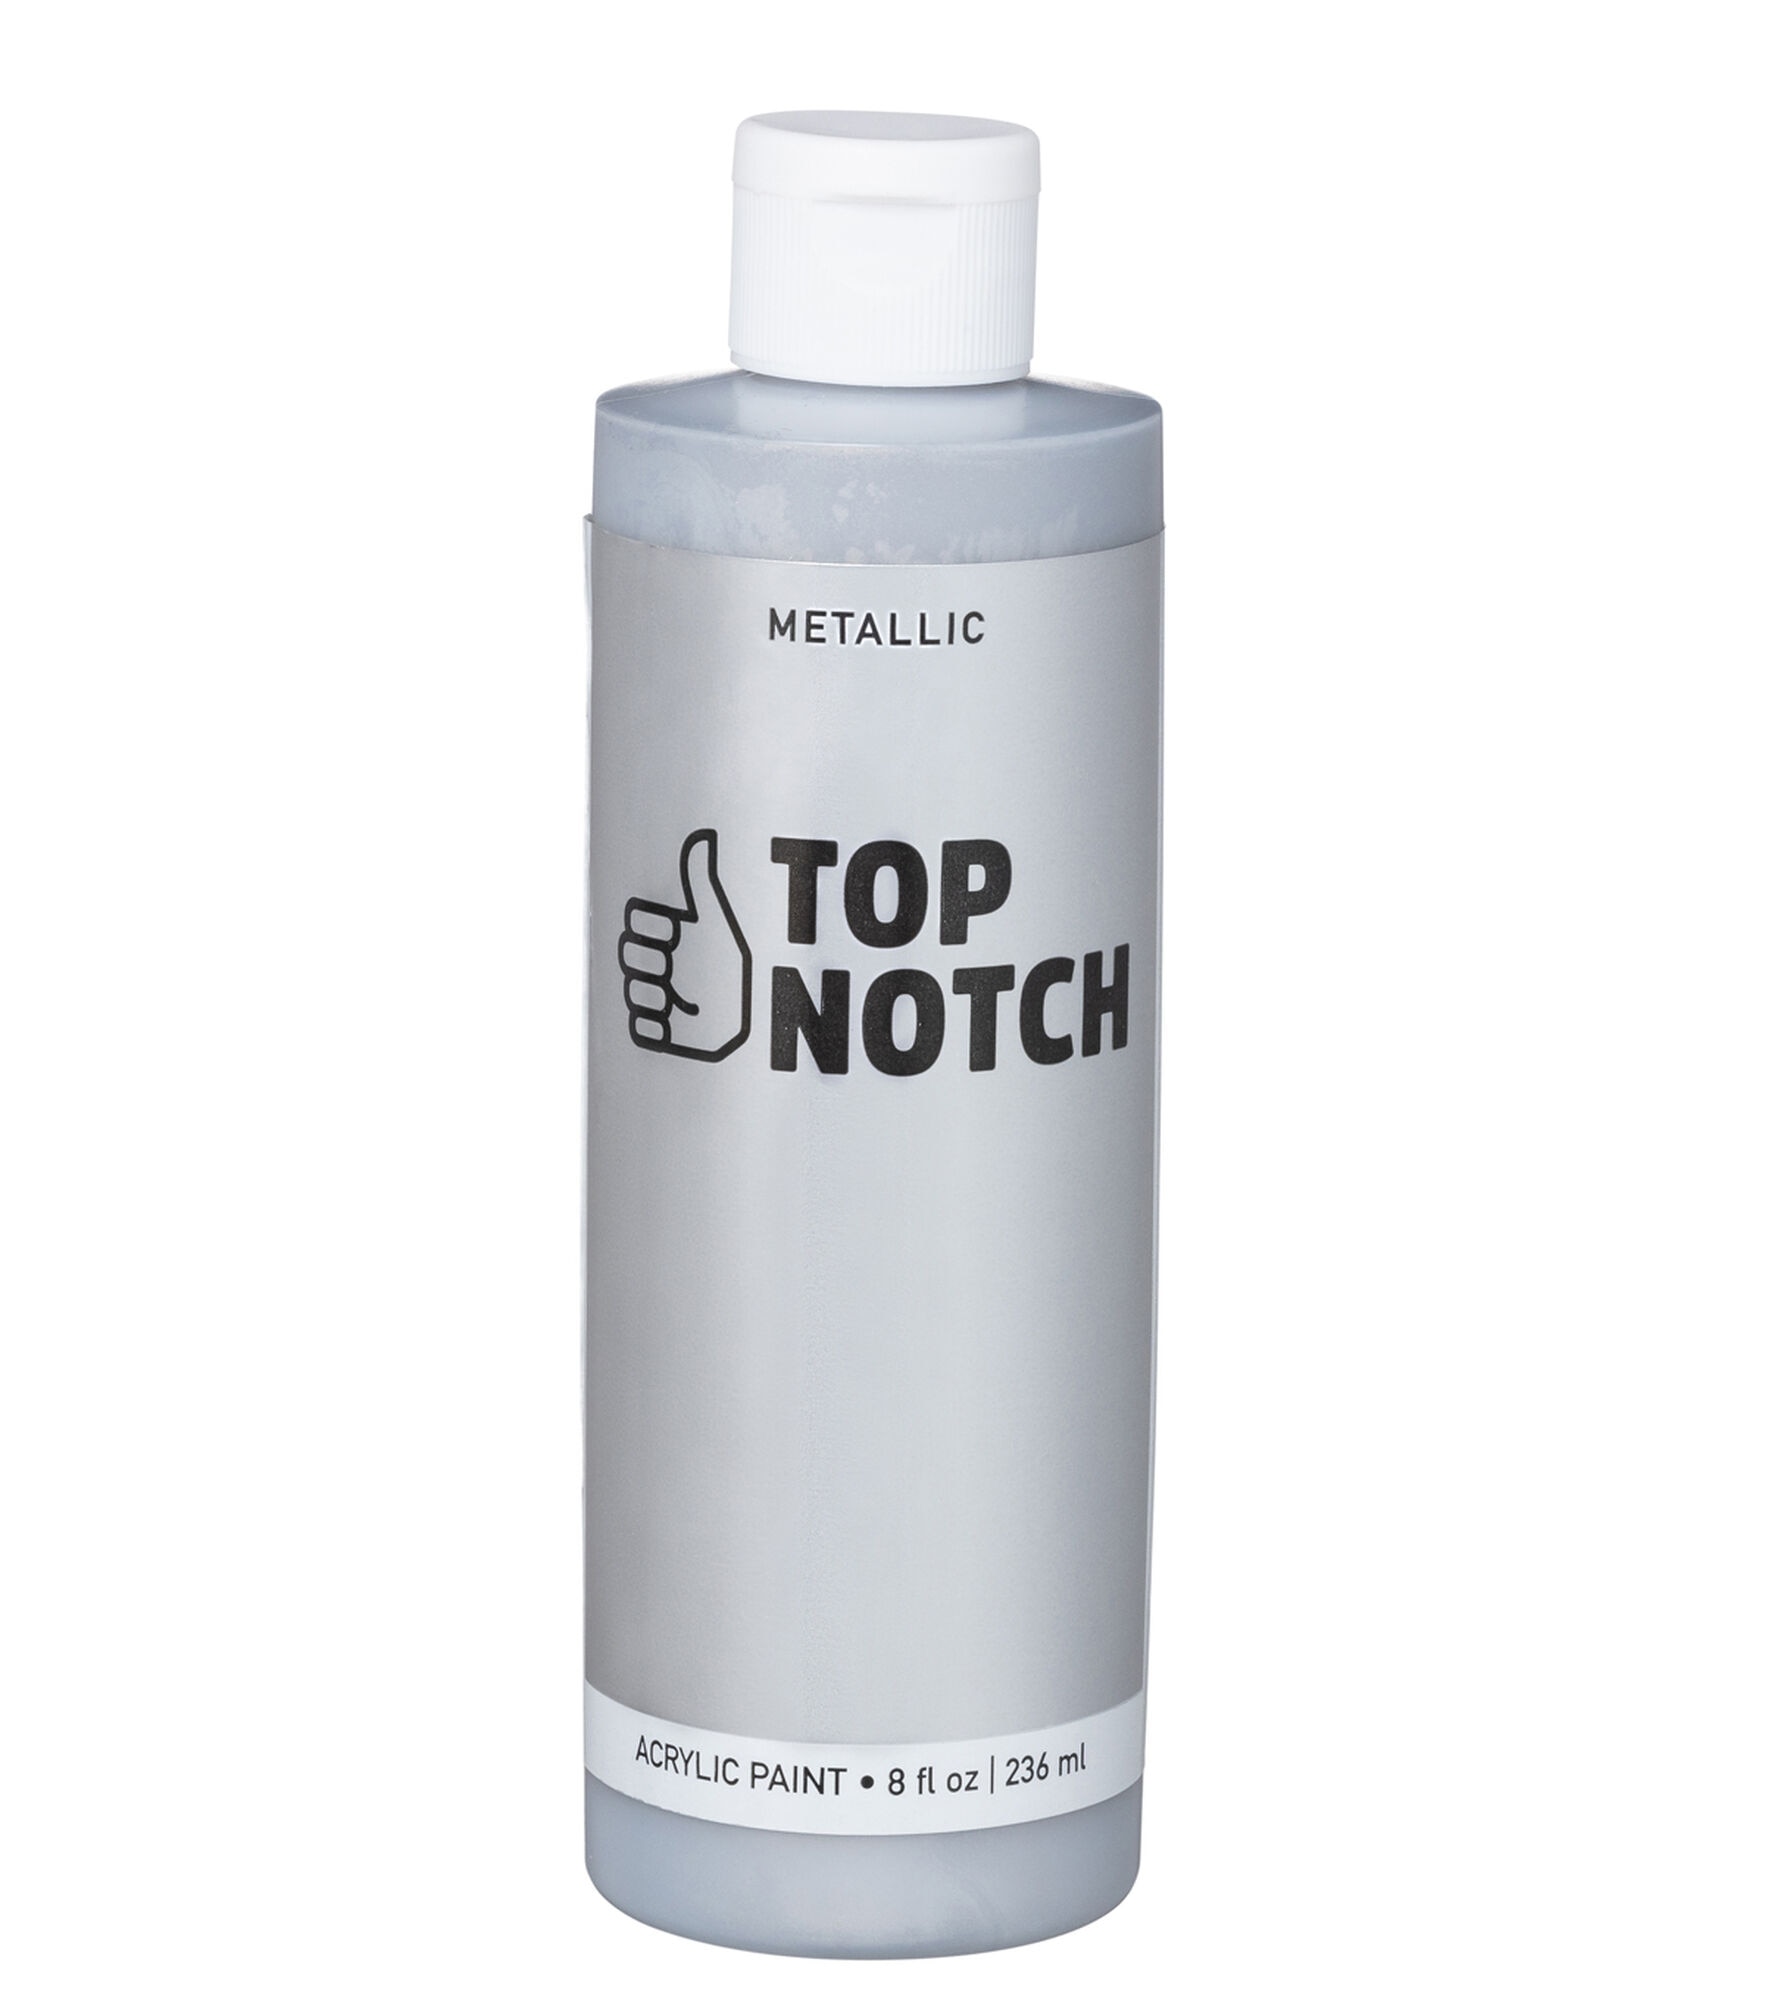 Top Notch 8oz Metallic Acrylic Paint - Silver - Acrylic Paint - Art Supplies & Painting